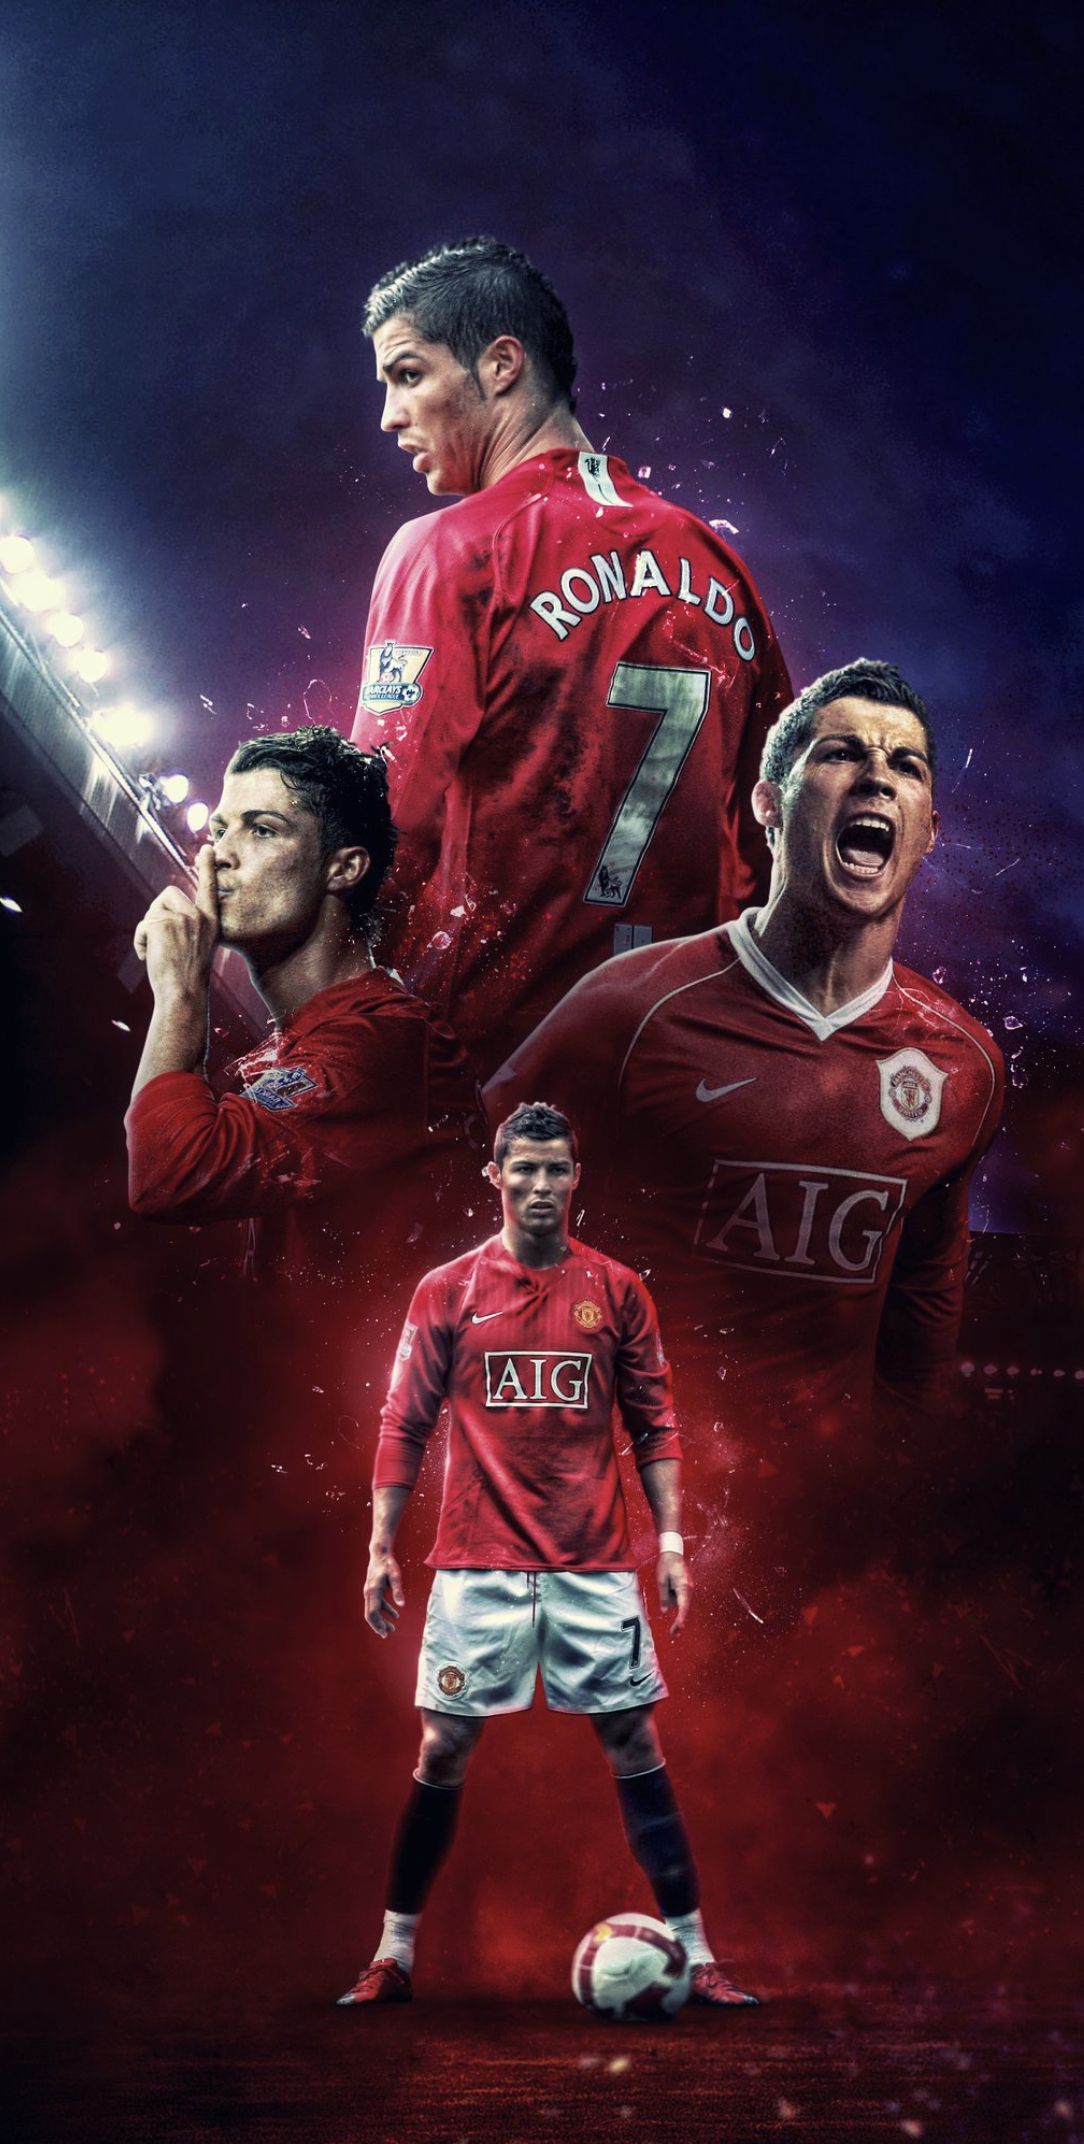 Man Utd Ronaldo Jersey - The Champions: Football Star Cristiano Ronaldo